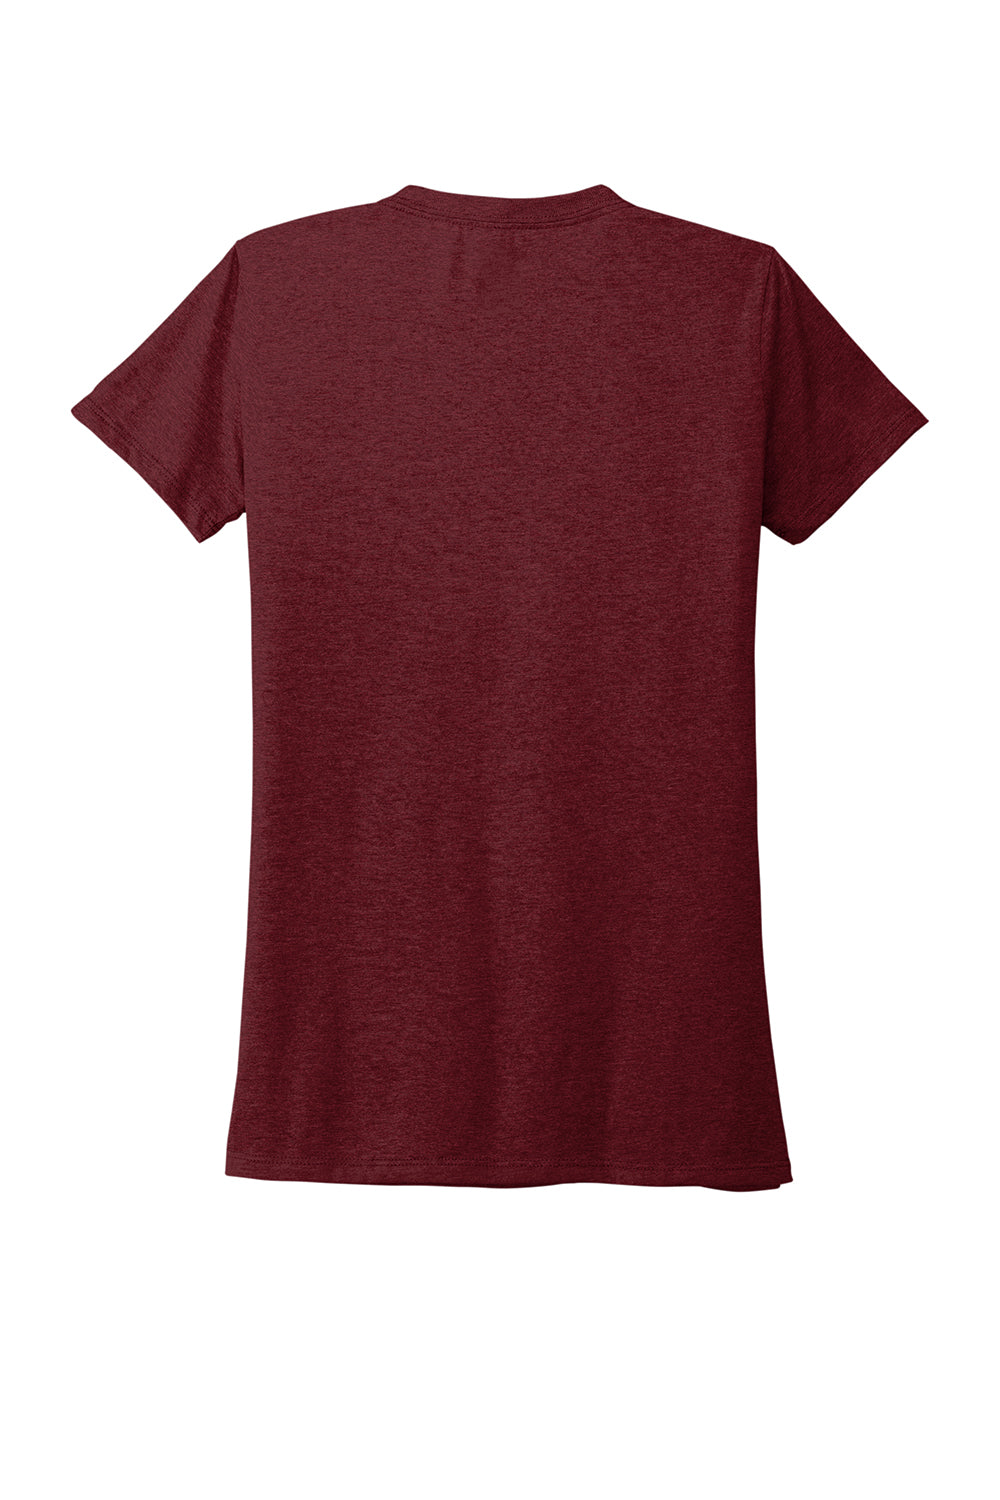 Allmade AL2008 Womens Short Sleeve Crewneck T-Shirt Vino Red Flat Back